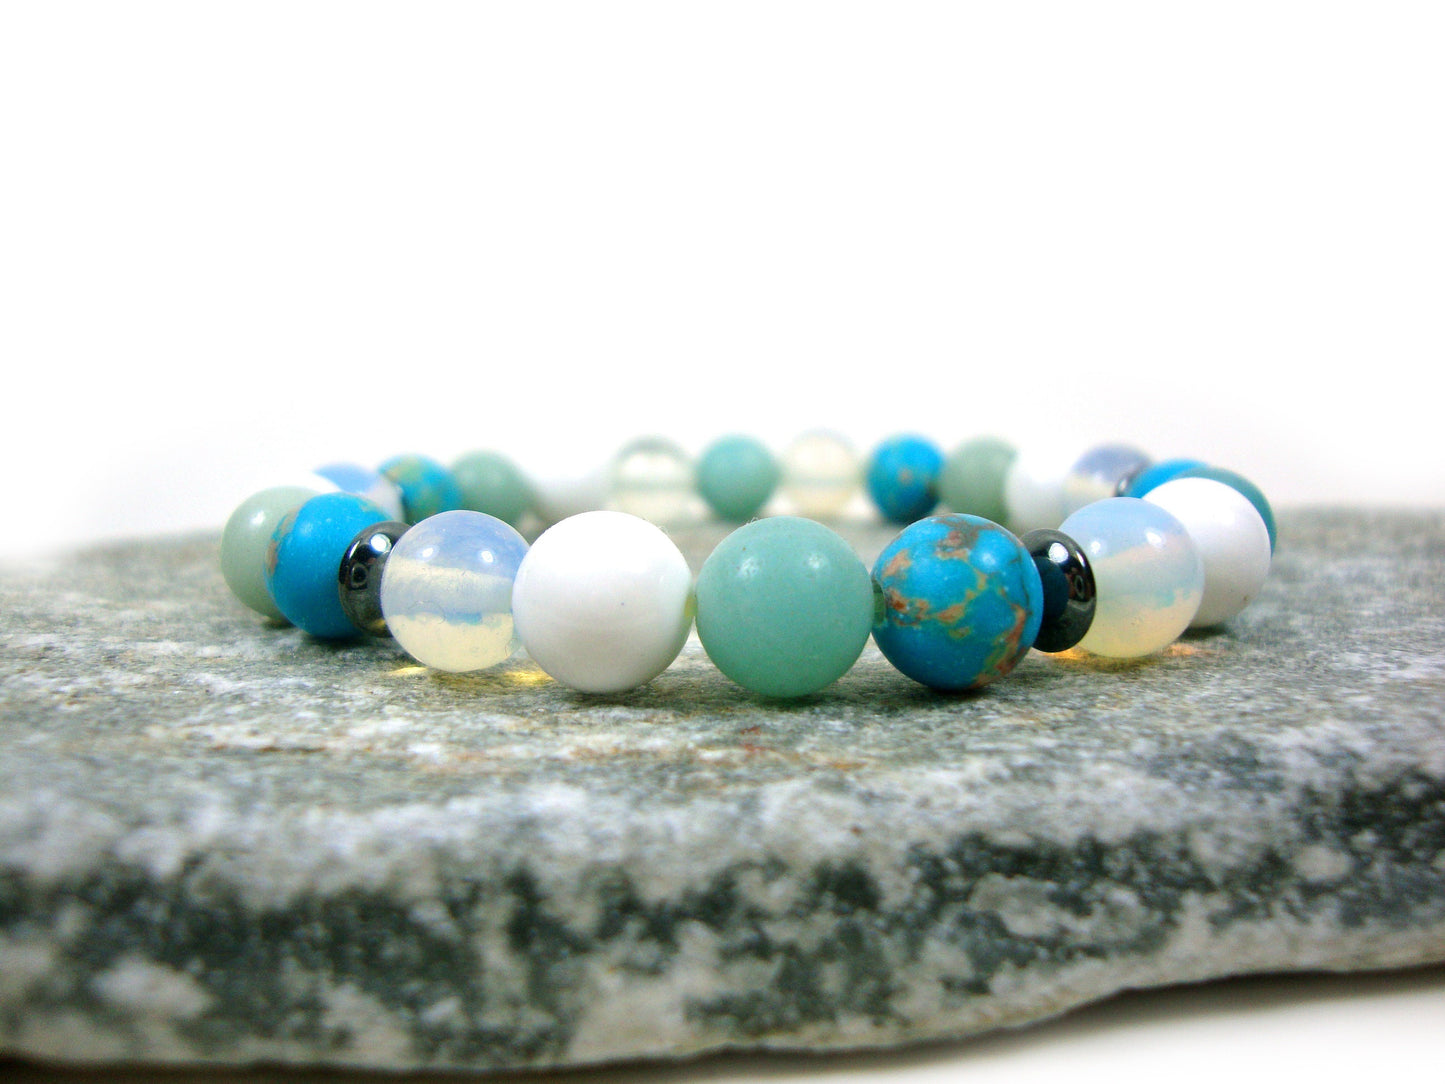 Natural Blue Agate-Amazonite-White Onyx-Moonstone Stones 6mm Stretch Bracelet, Gemstone Bracelet, Summer Bracelet, Natur Echt Stein Armband